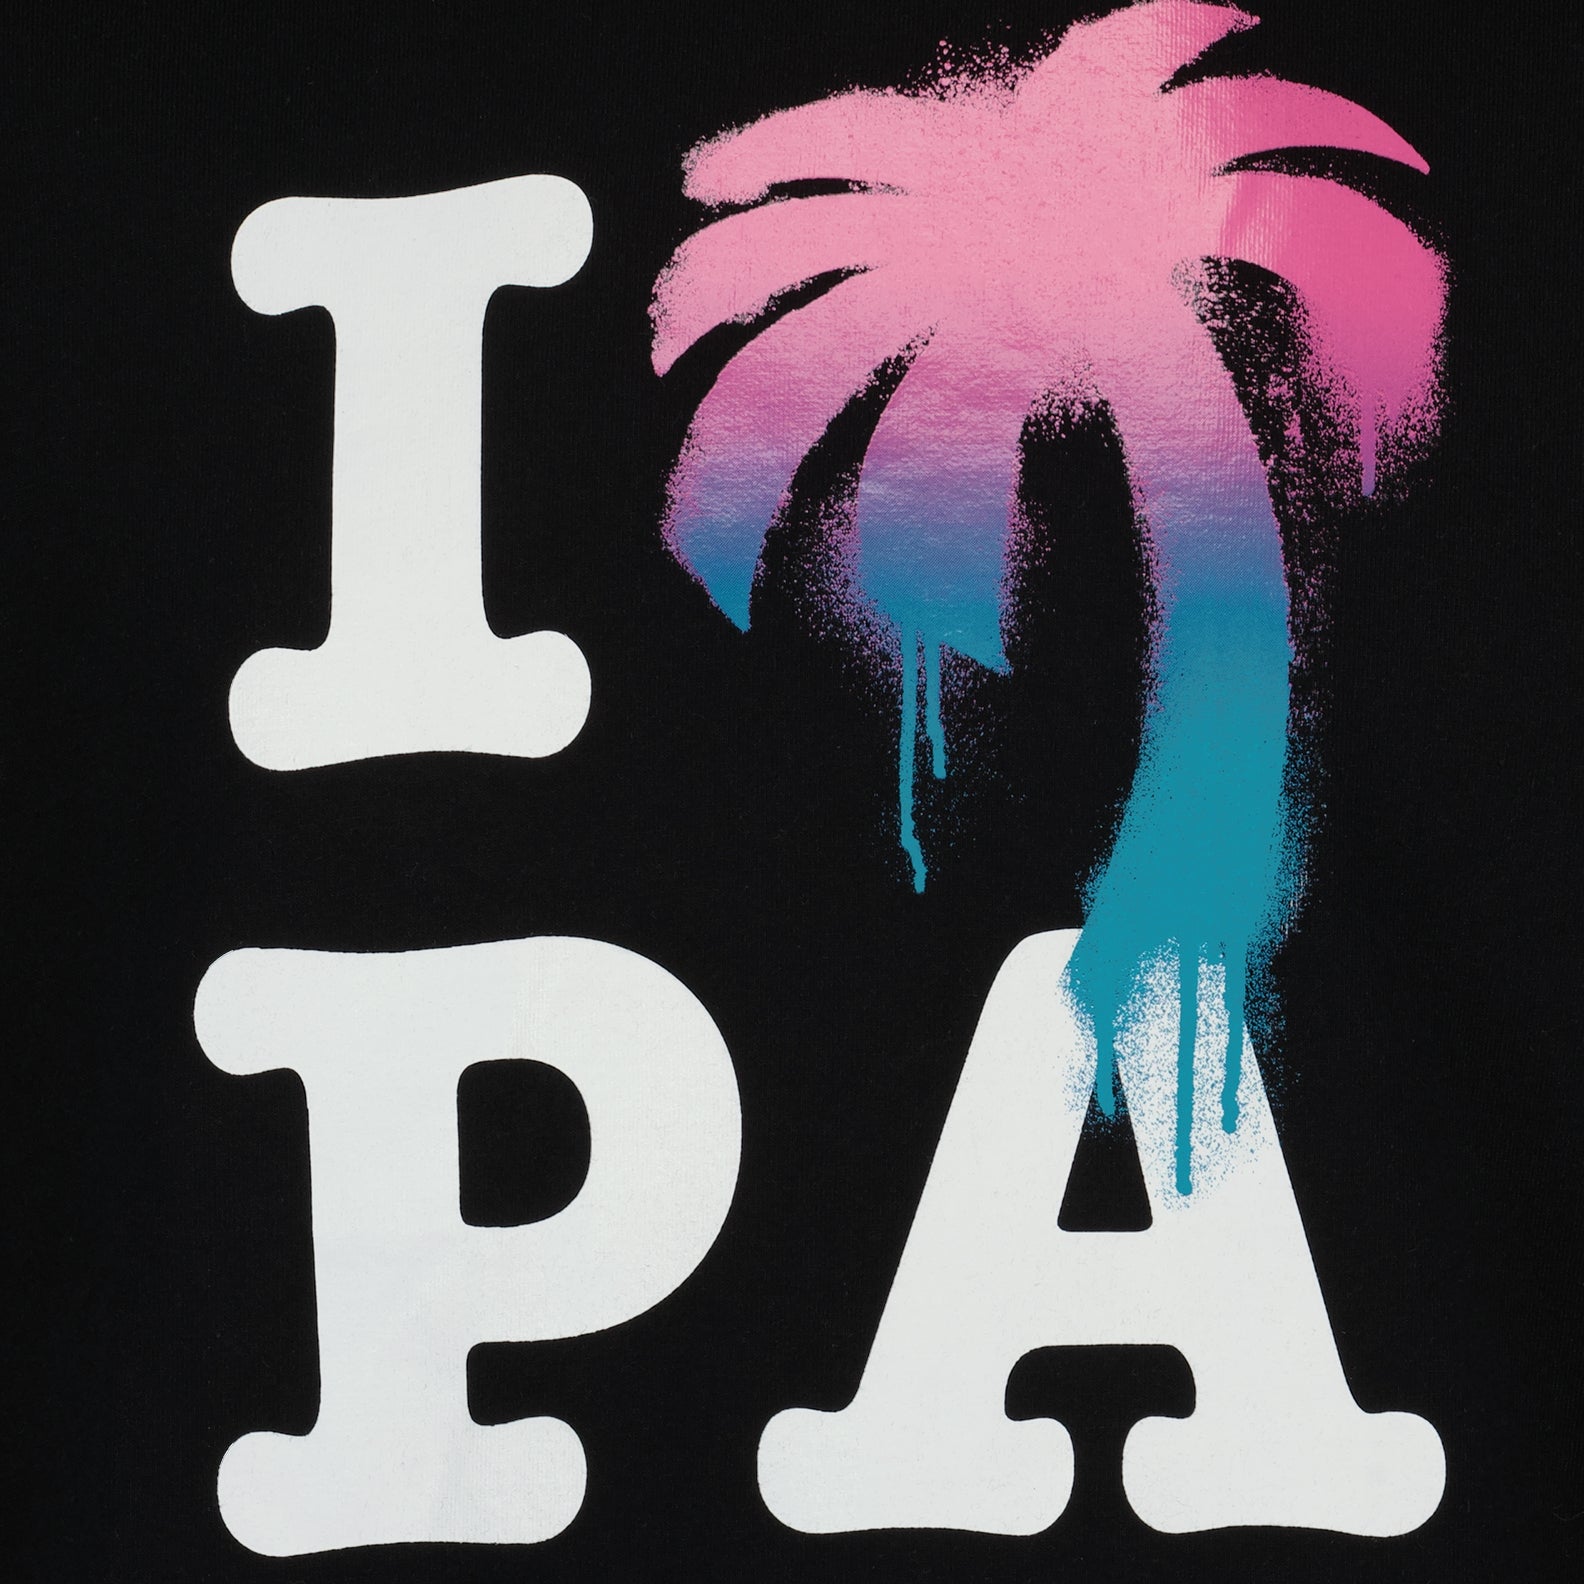 I love PA t-shirt